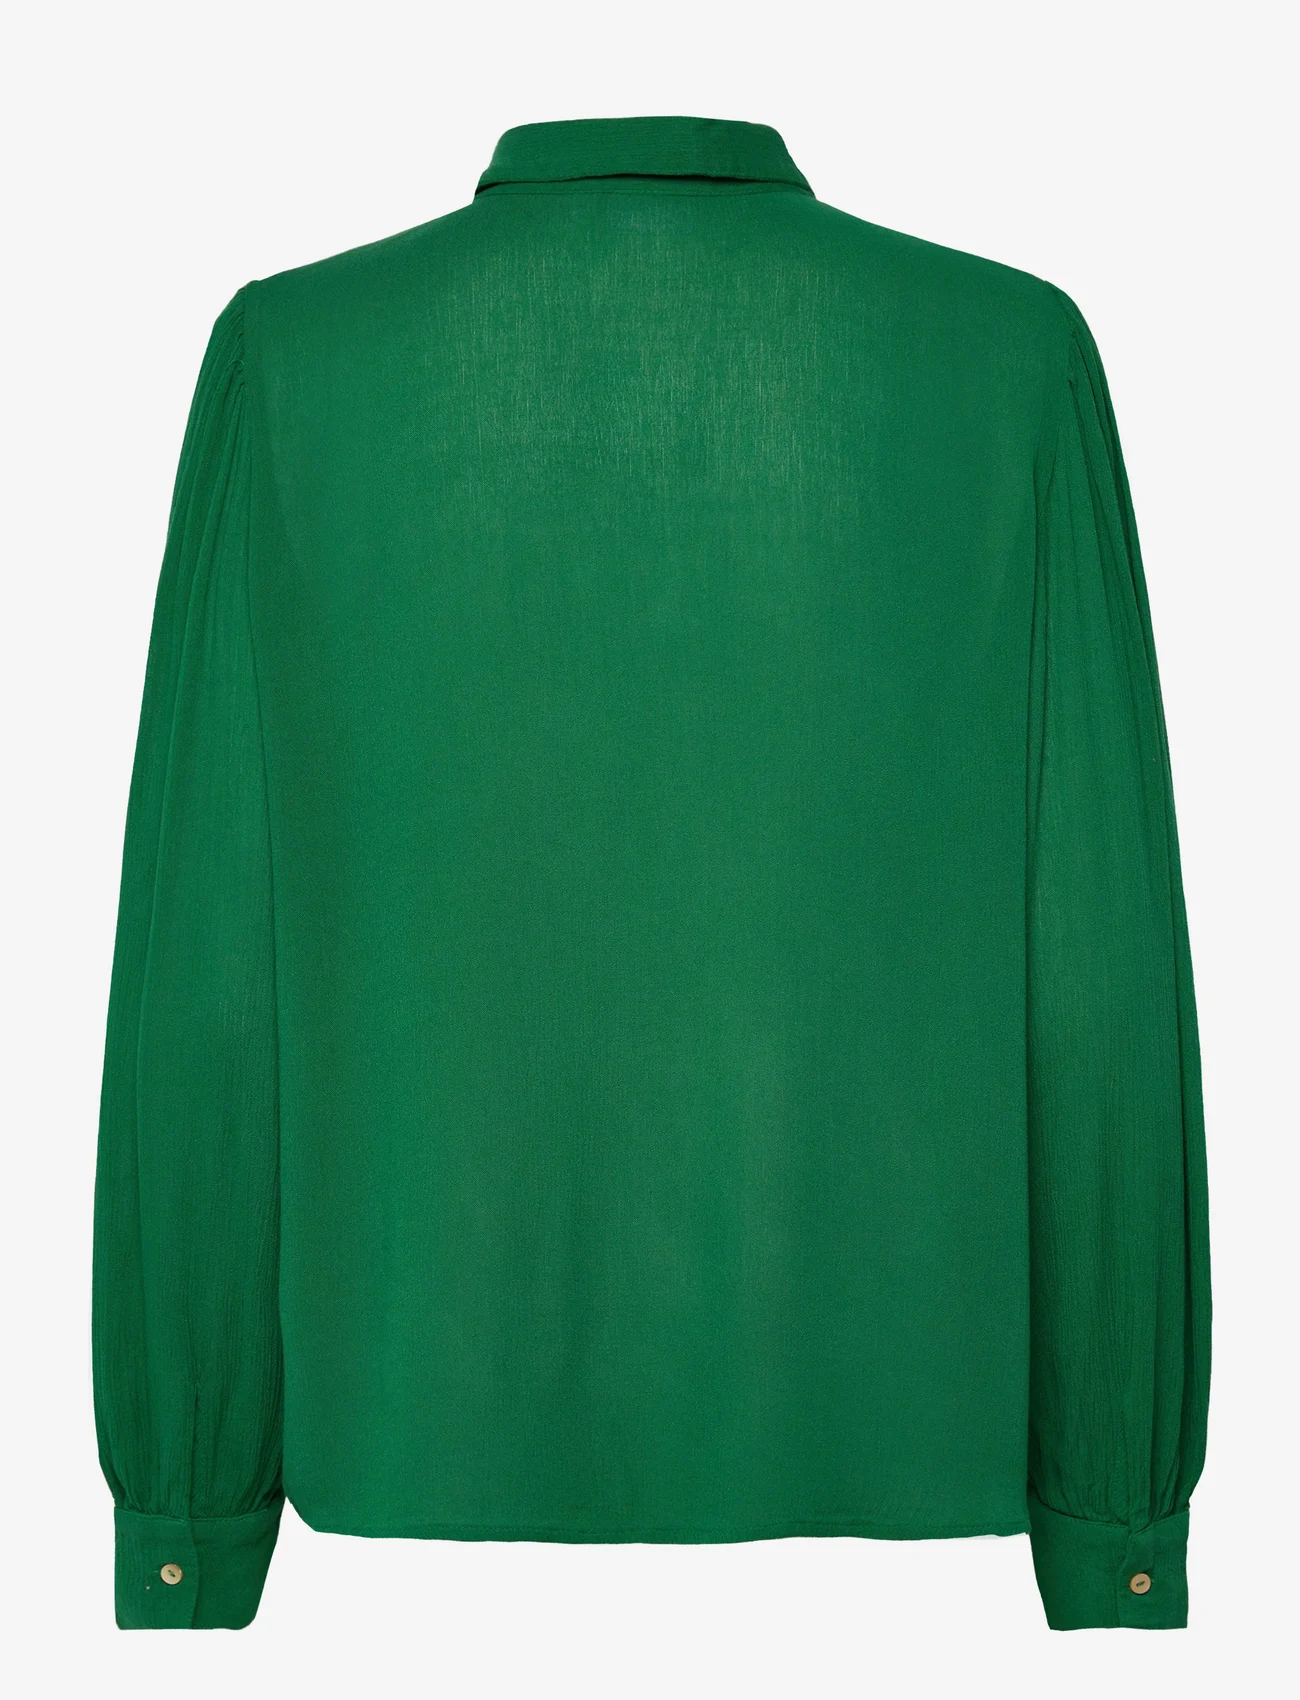 Saint Tropez - AlbaSZ Shirt - pitkähihaiset paidat - verdant green - 1